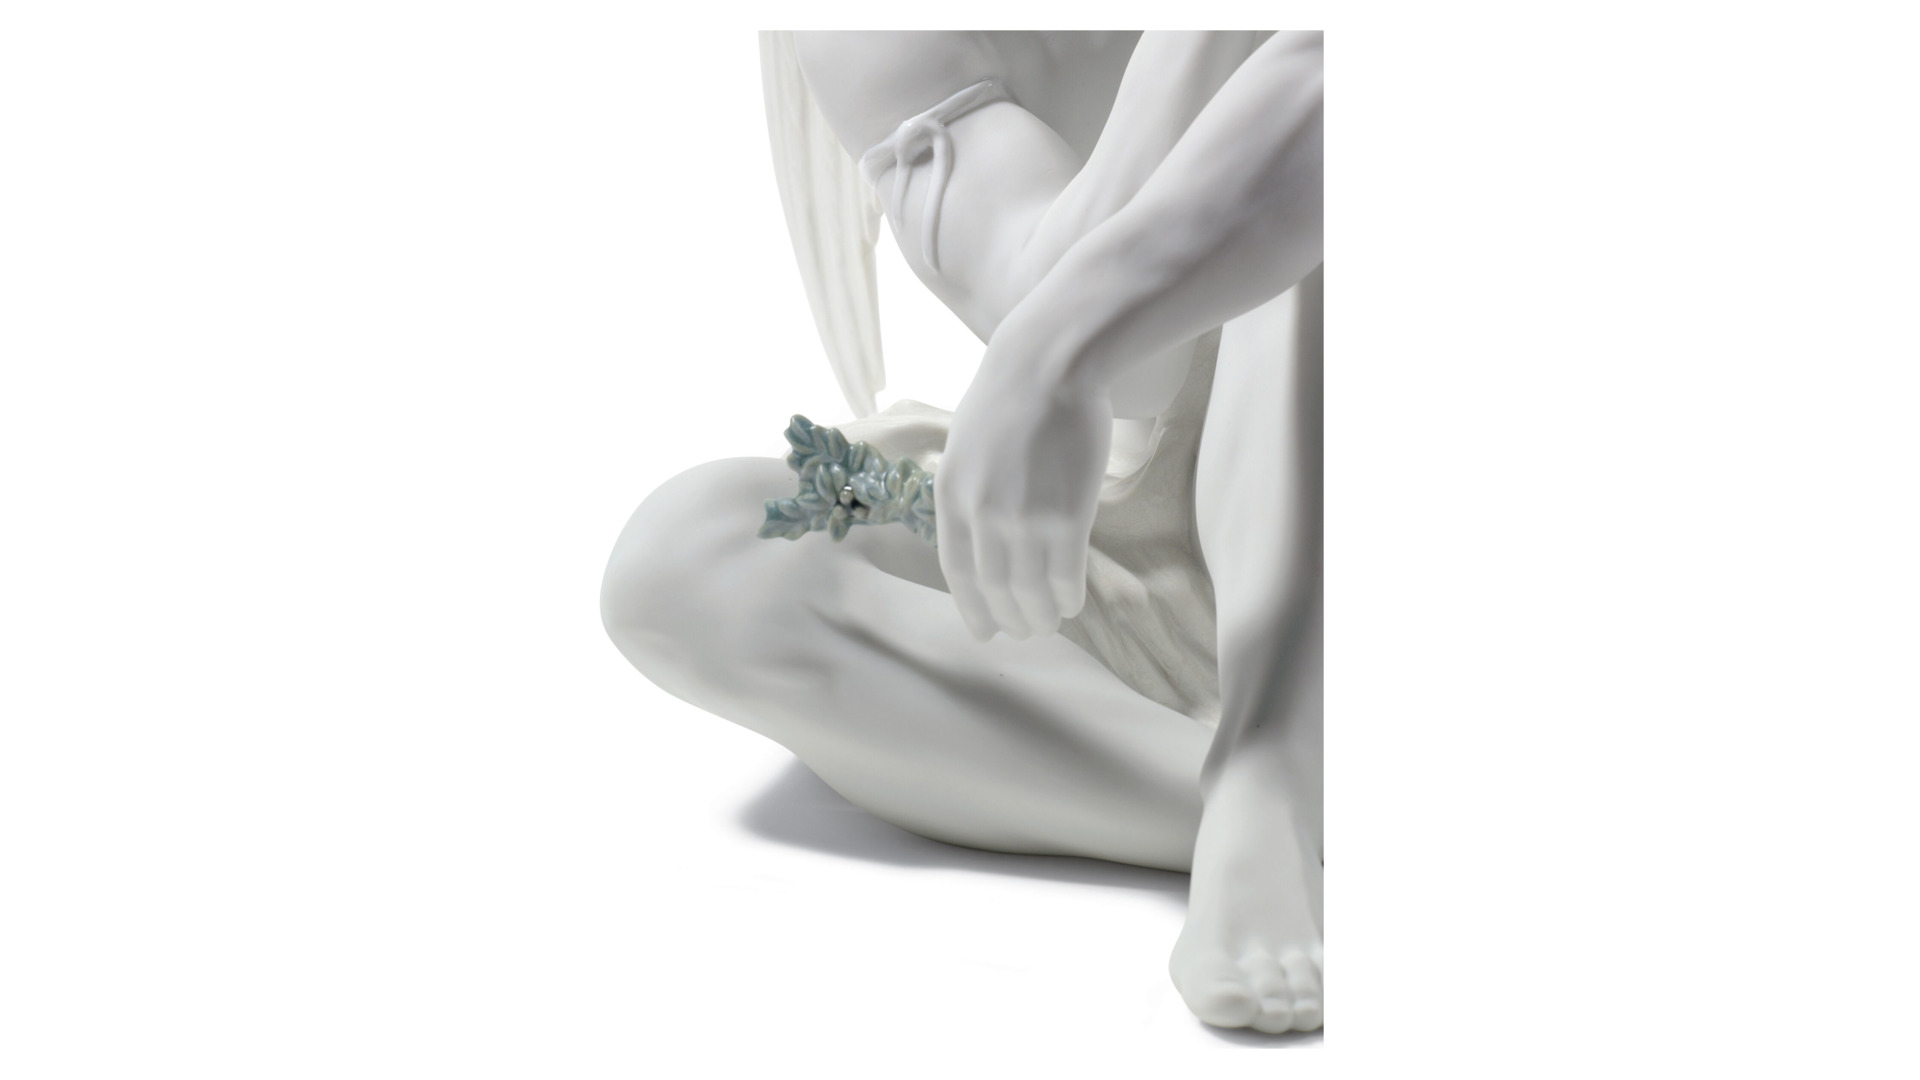 Фигурка Lladro Ангел-хранитель 40х28 см, фарфор